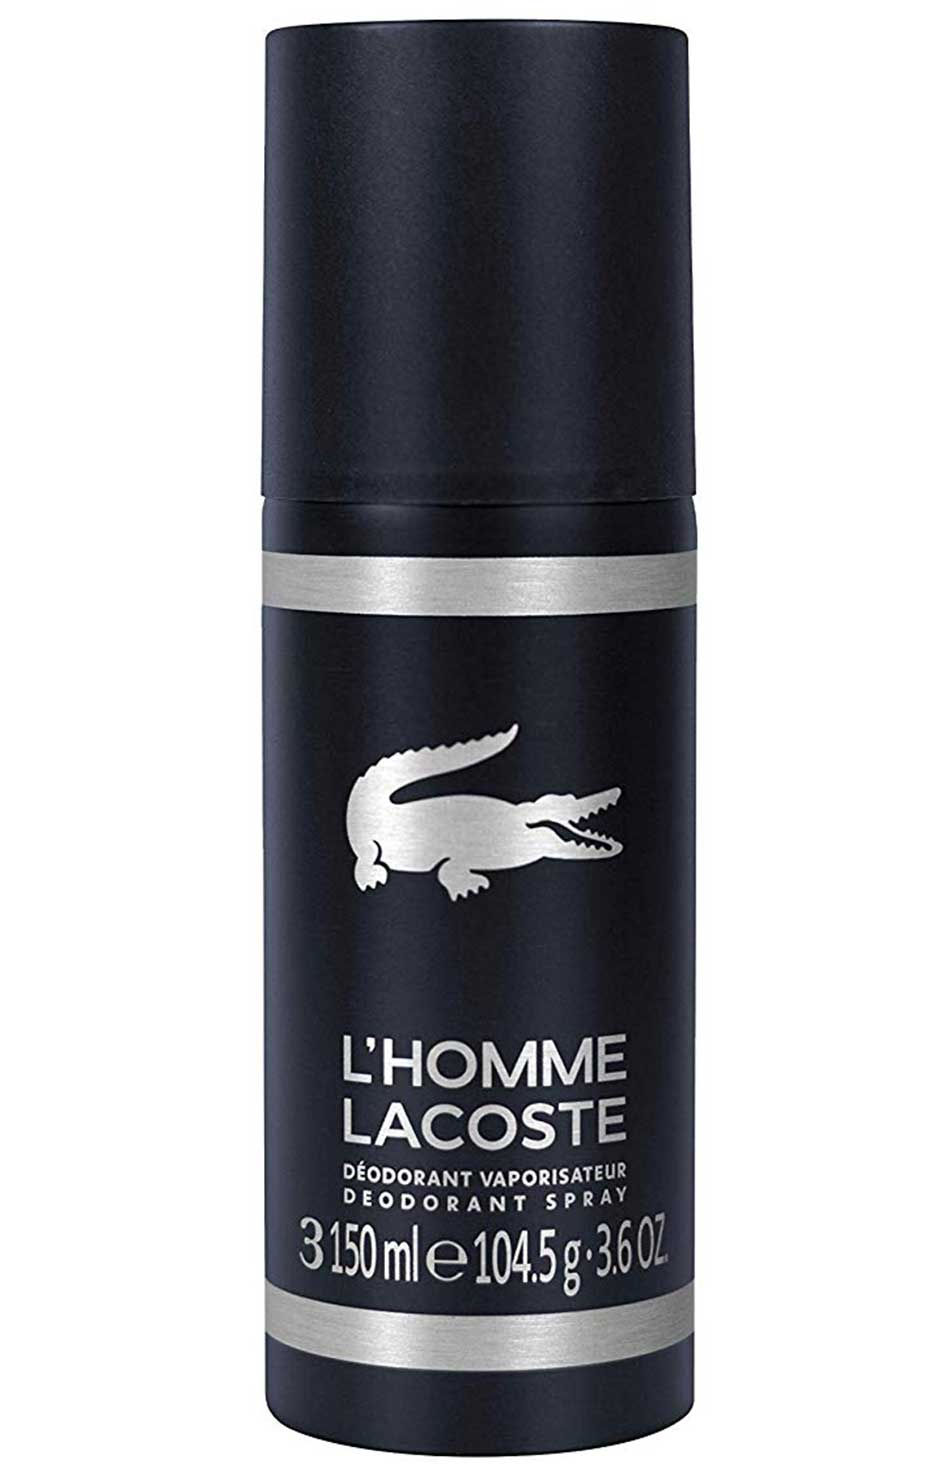 Lacoste L'Homme Deodorant Spray 150ml 